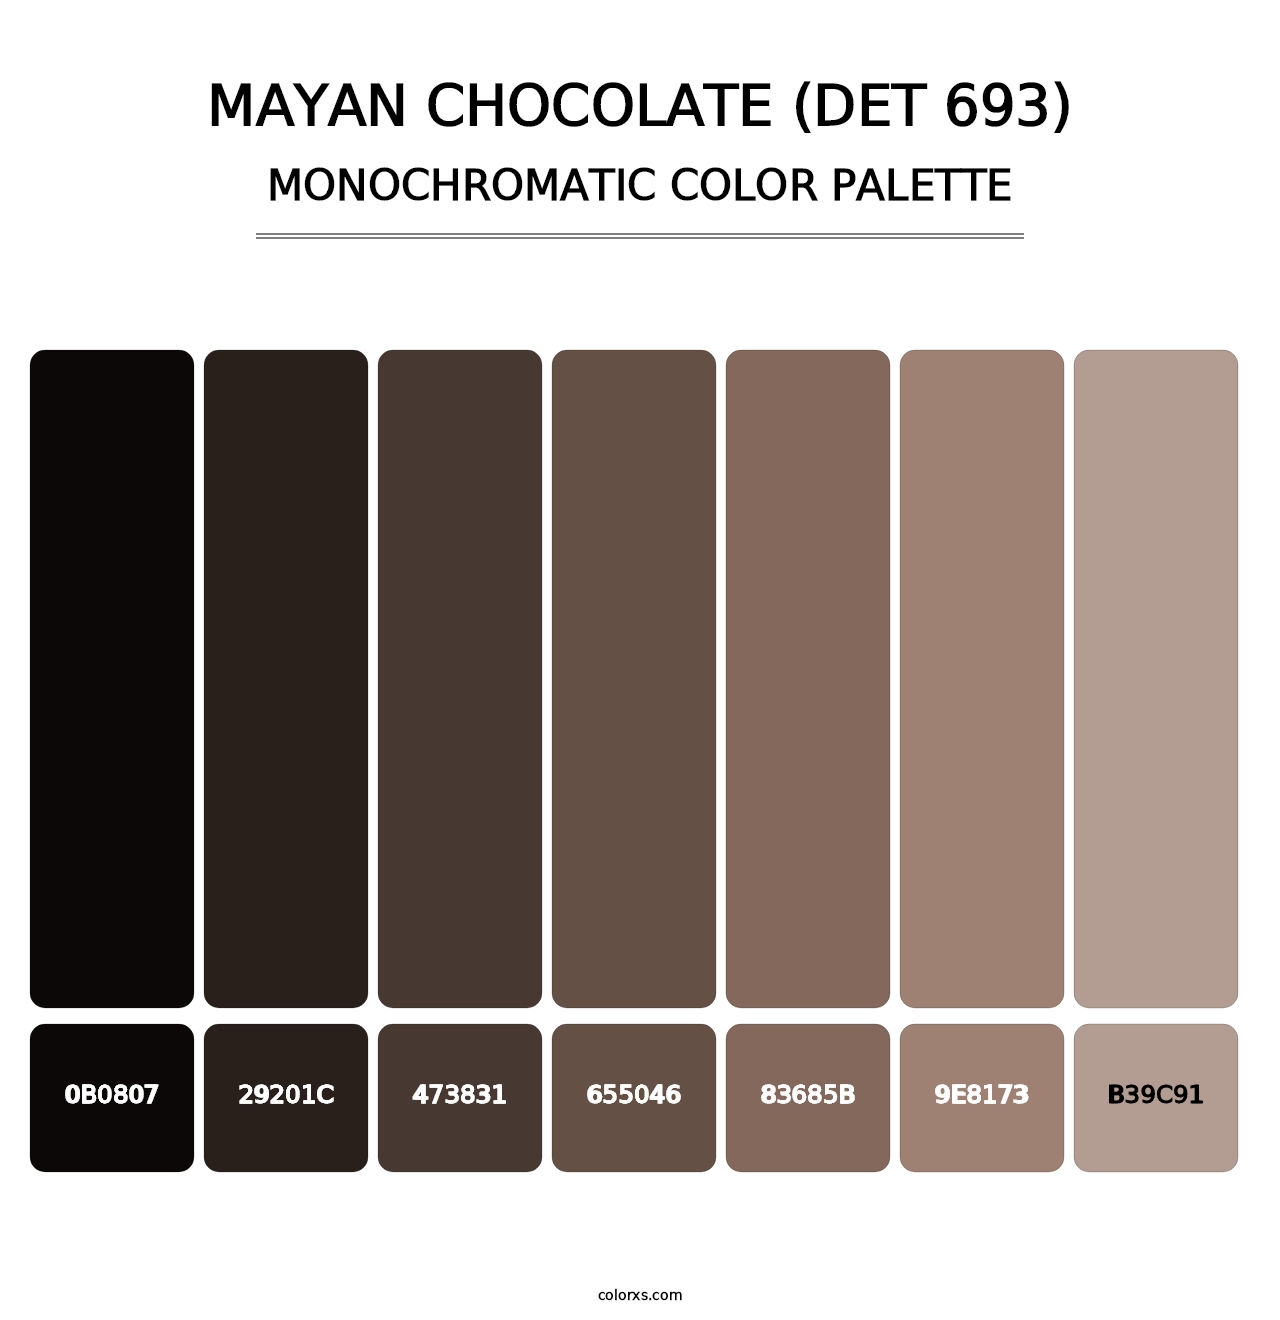 Mayan Chocolate (DET 693) - Monochromatic Color Palette